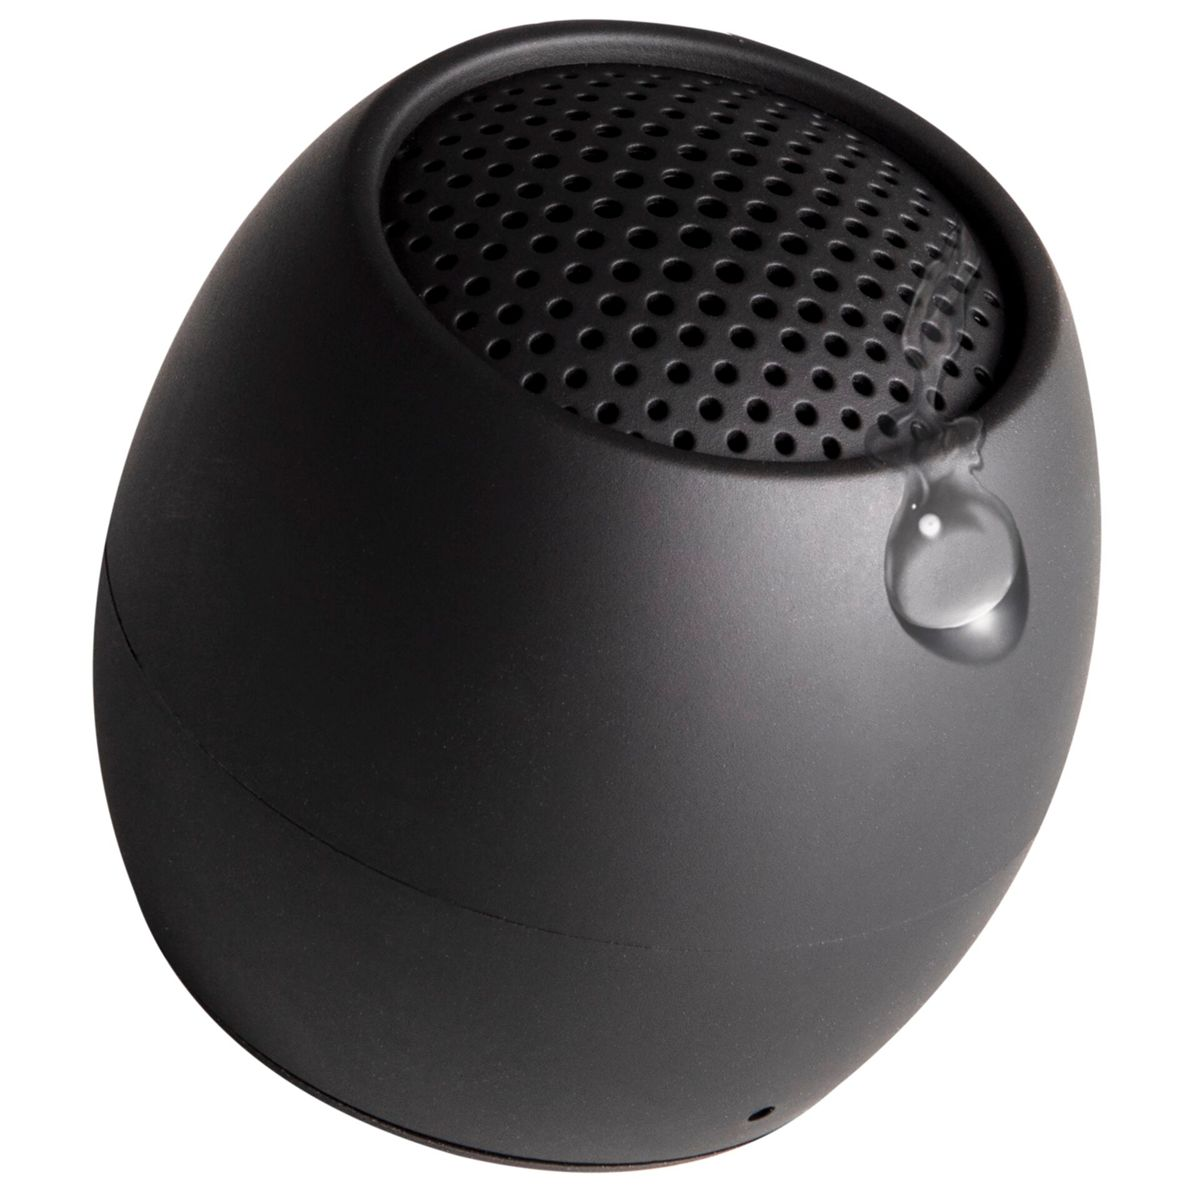 Bluetooth-Lautsprecher, Black Zero schwarz BOOMPODS